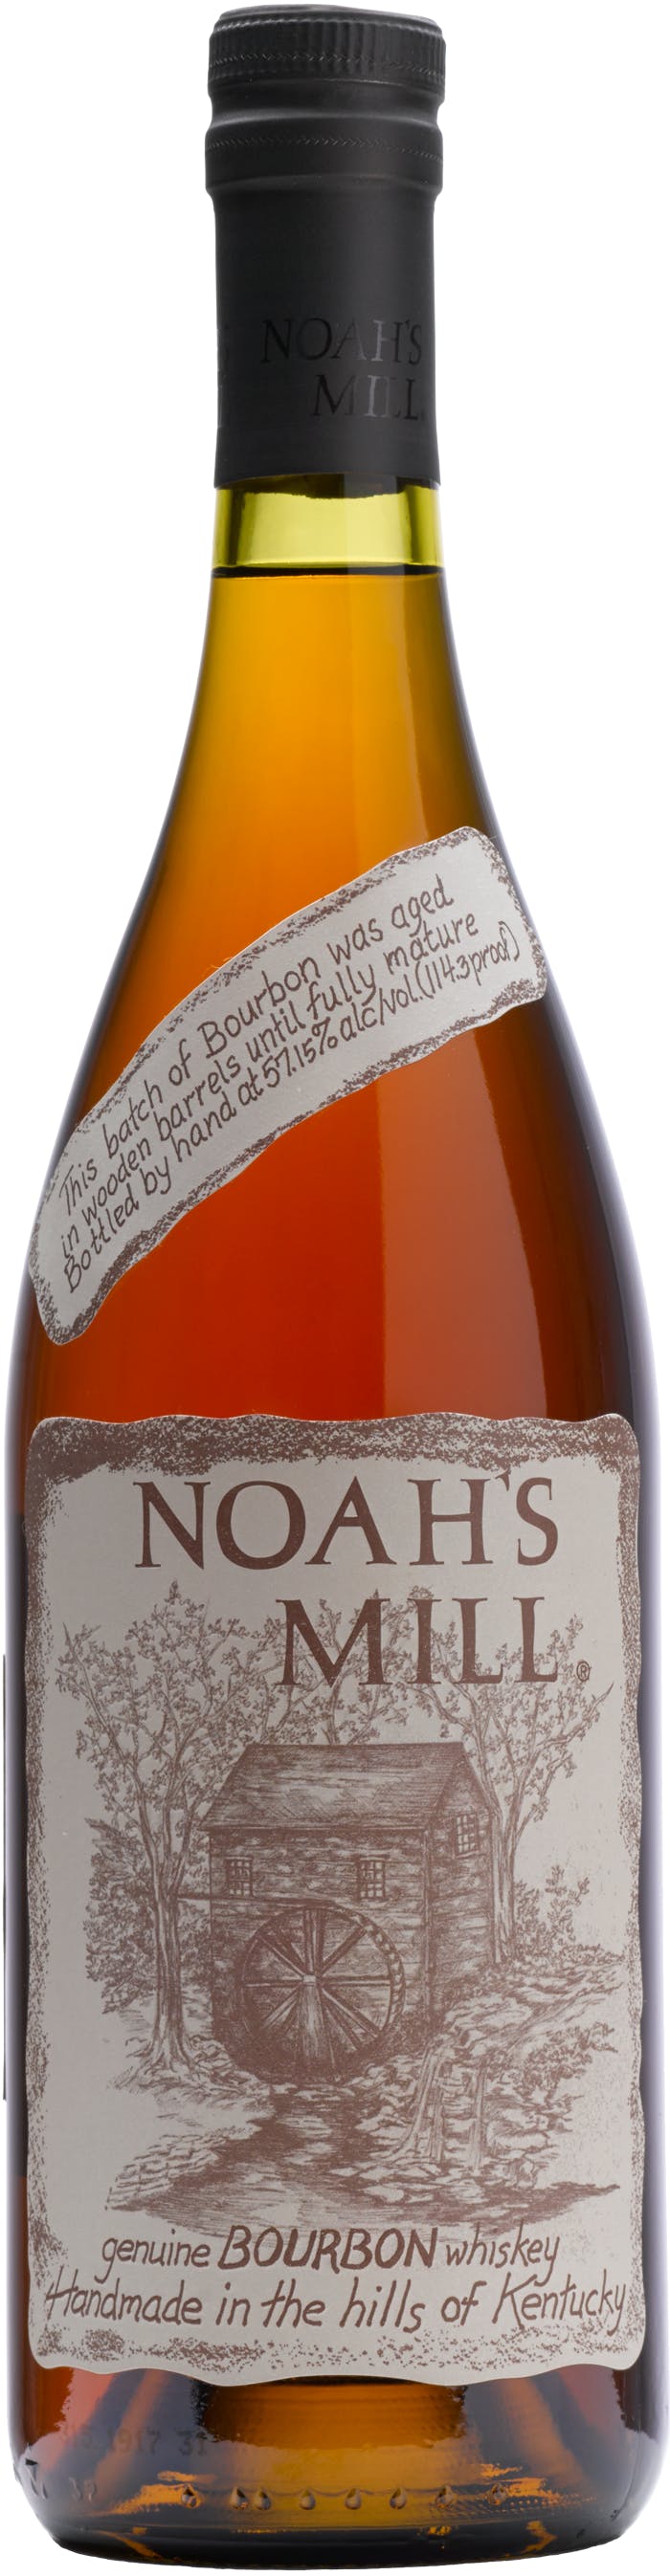 Noah's Mill, Kentucky Bourbon Whiskey